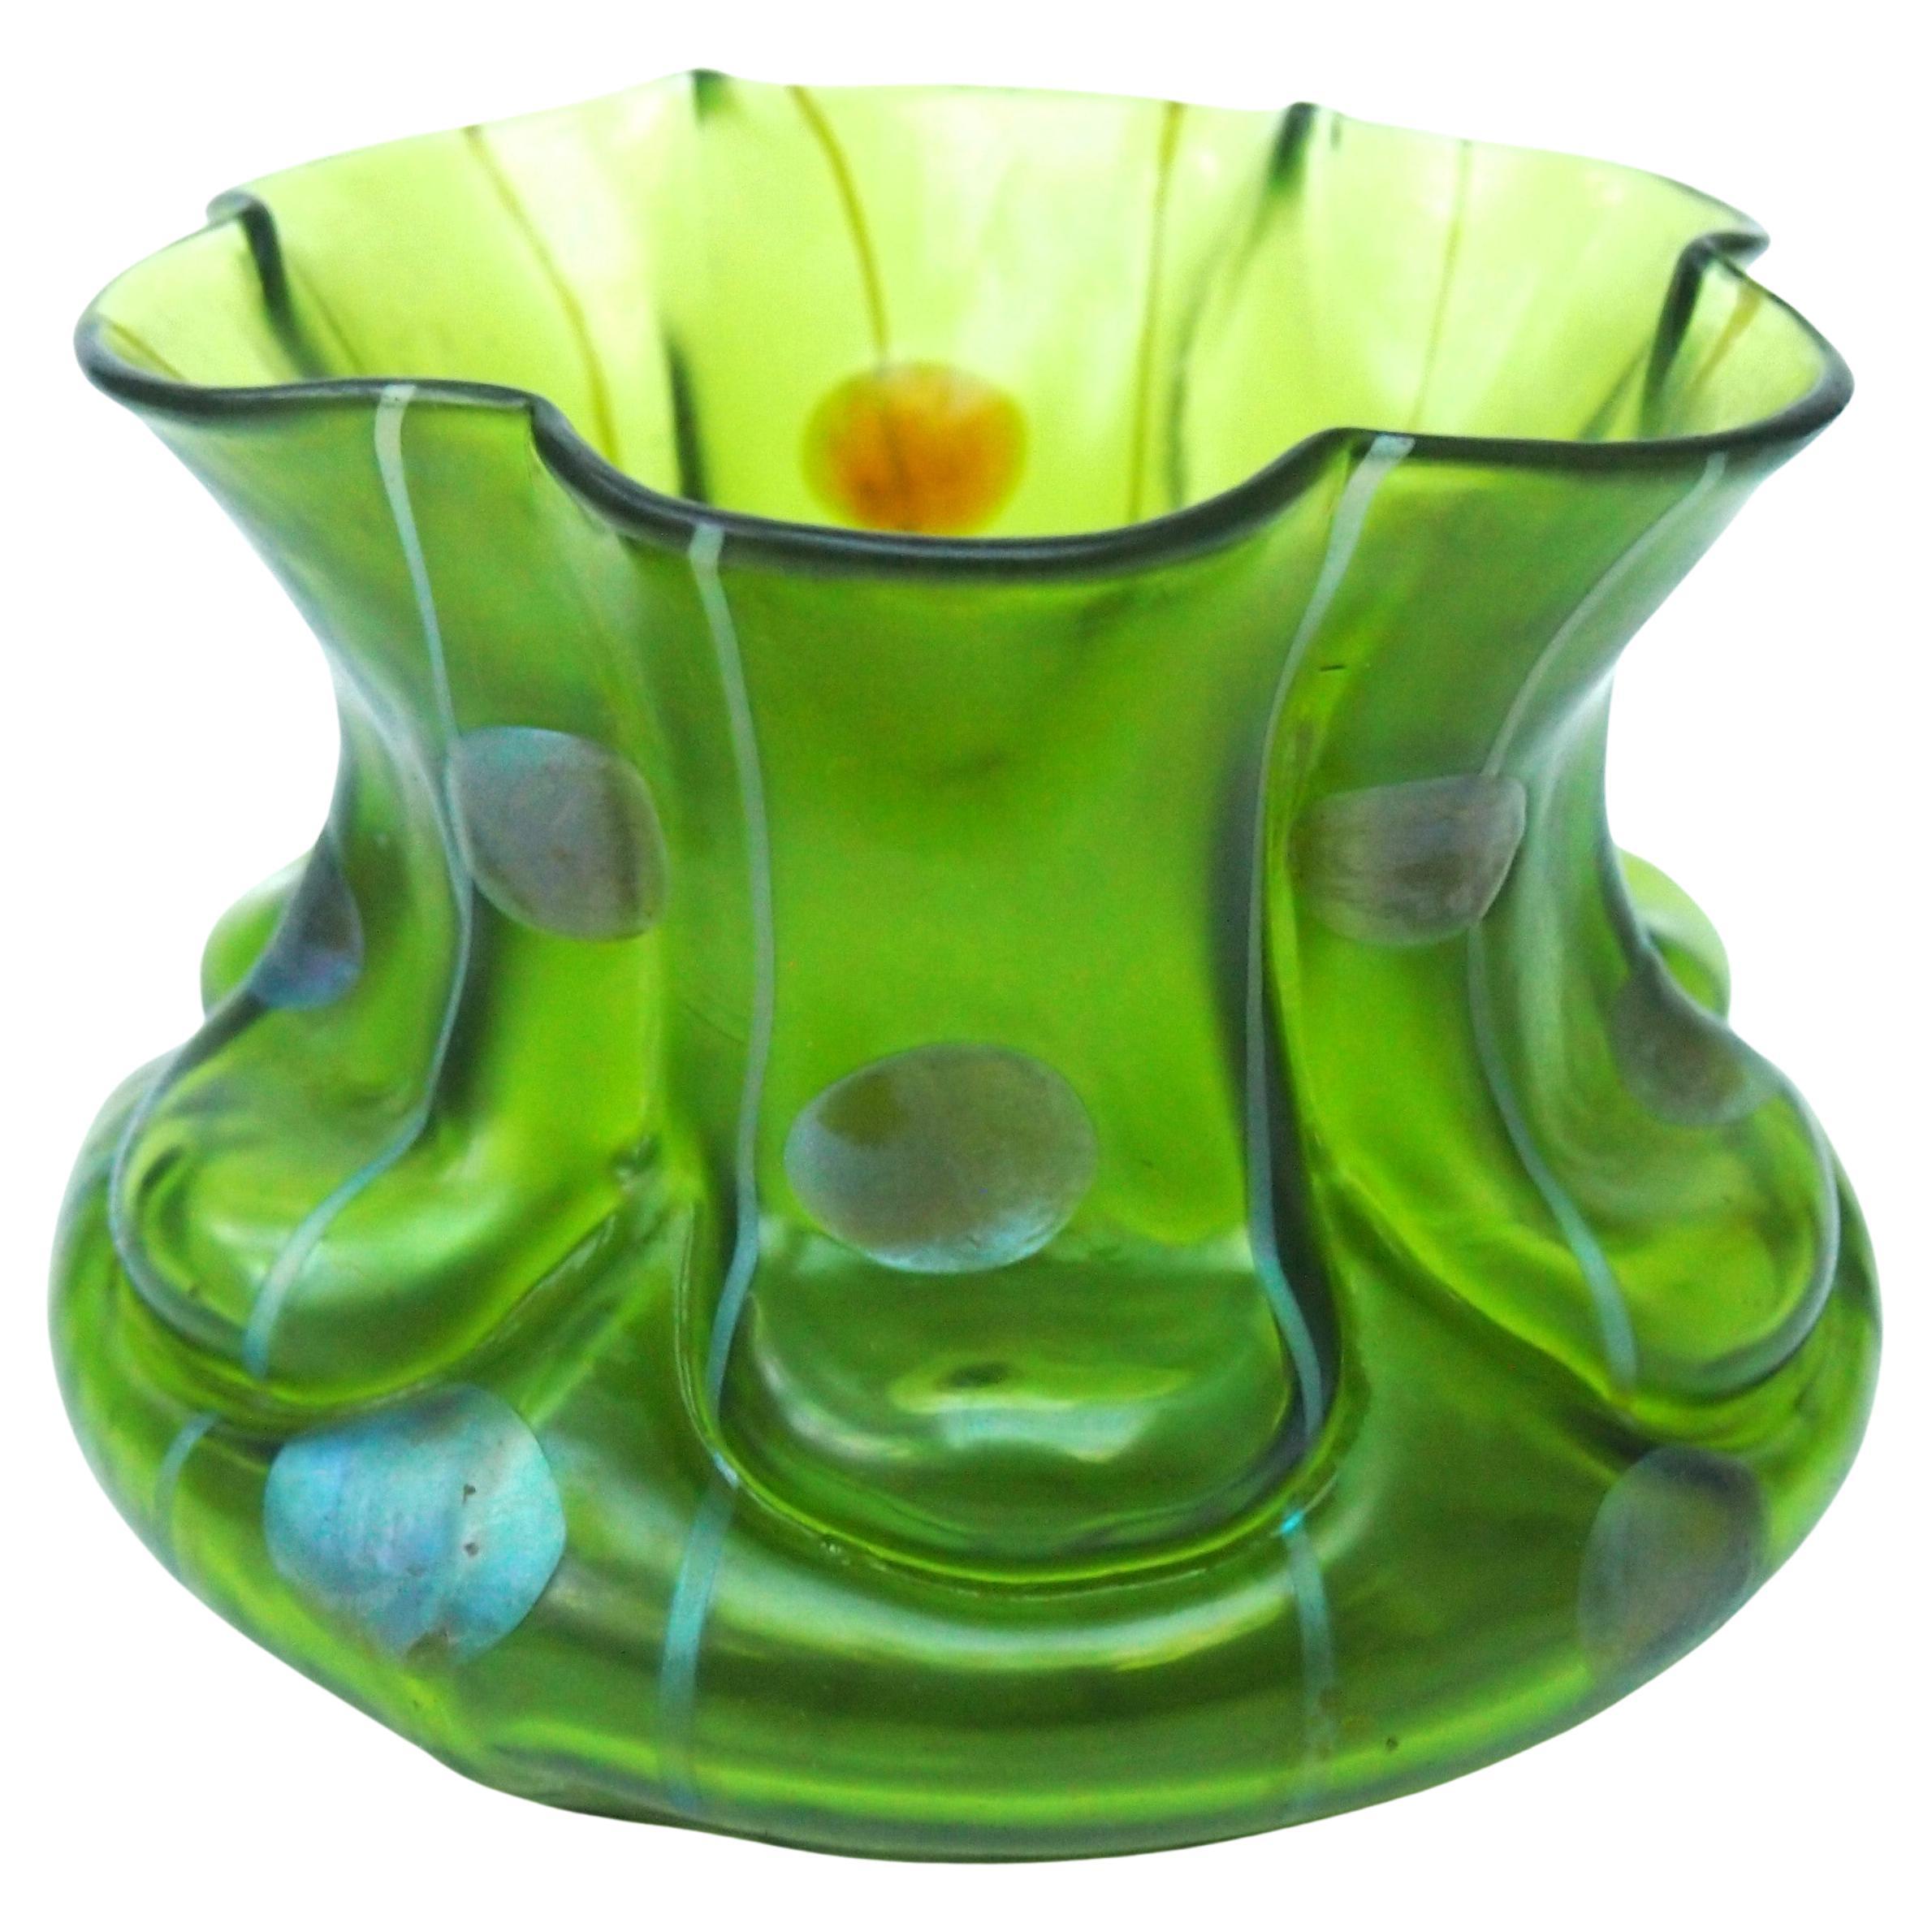 Kralik Striefen and Flecken Bohemian Glass Vase c1899 For Sale